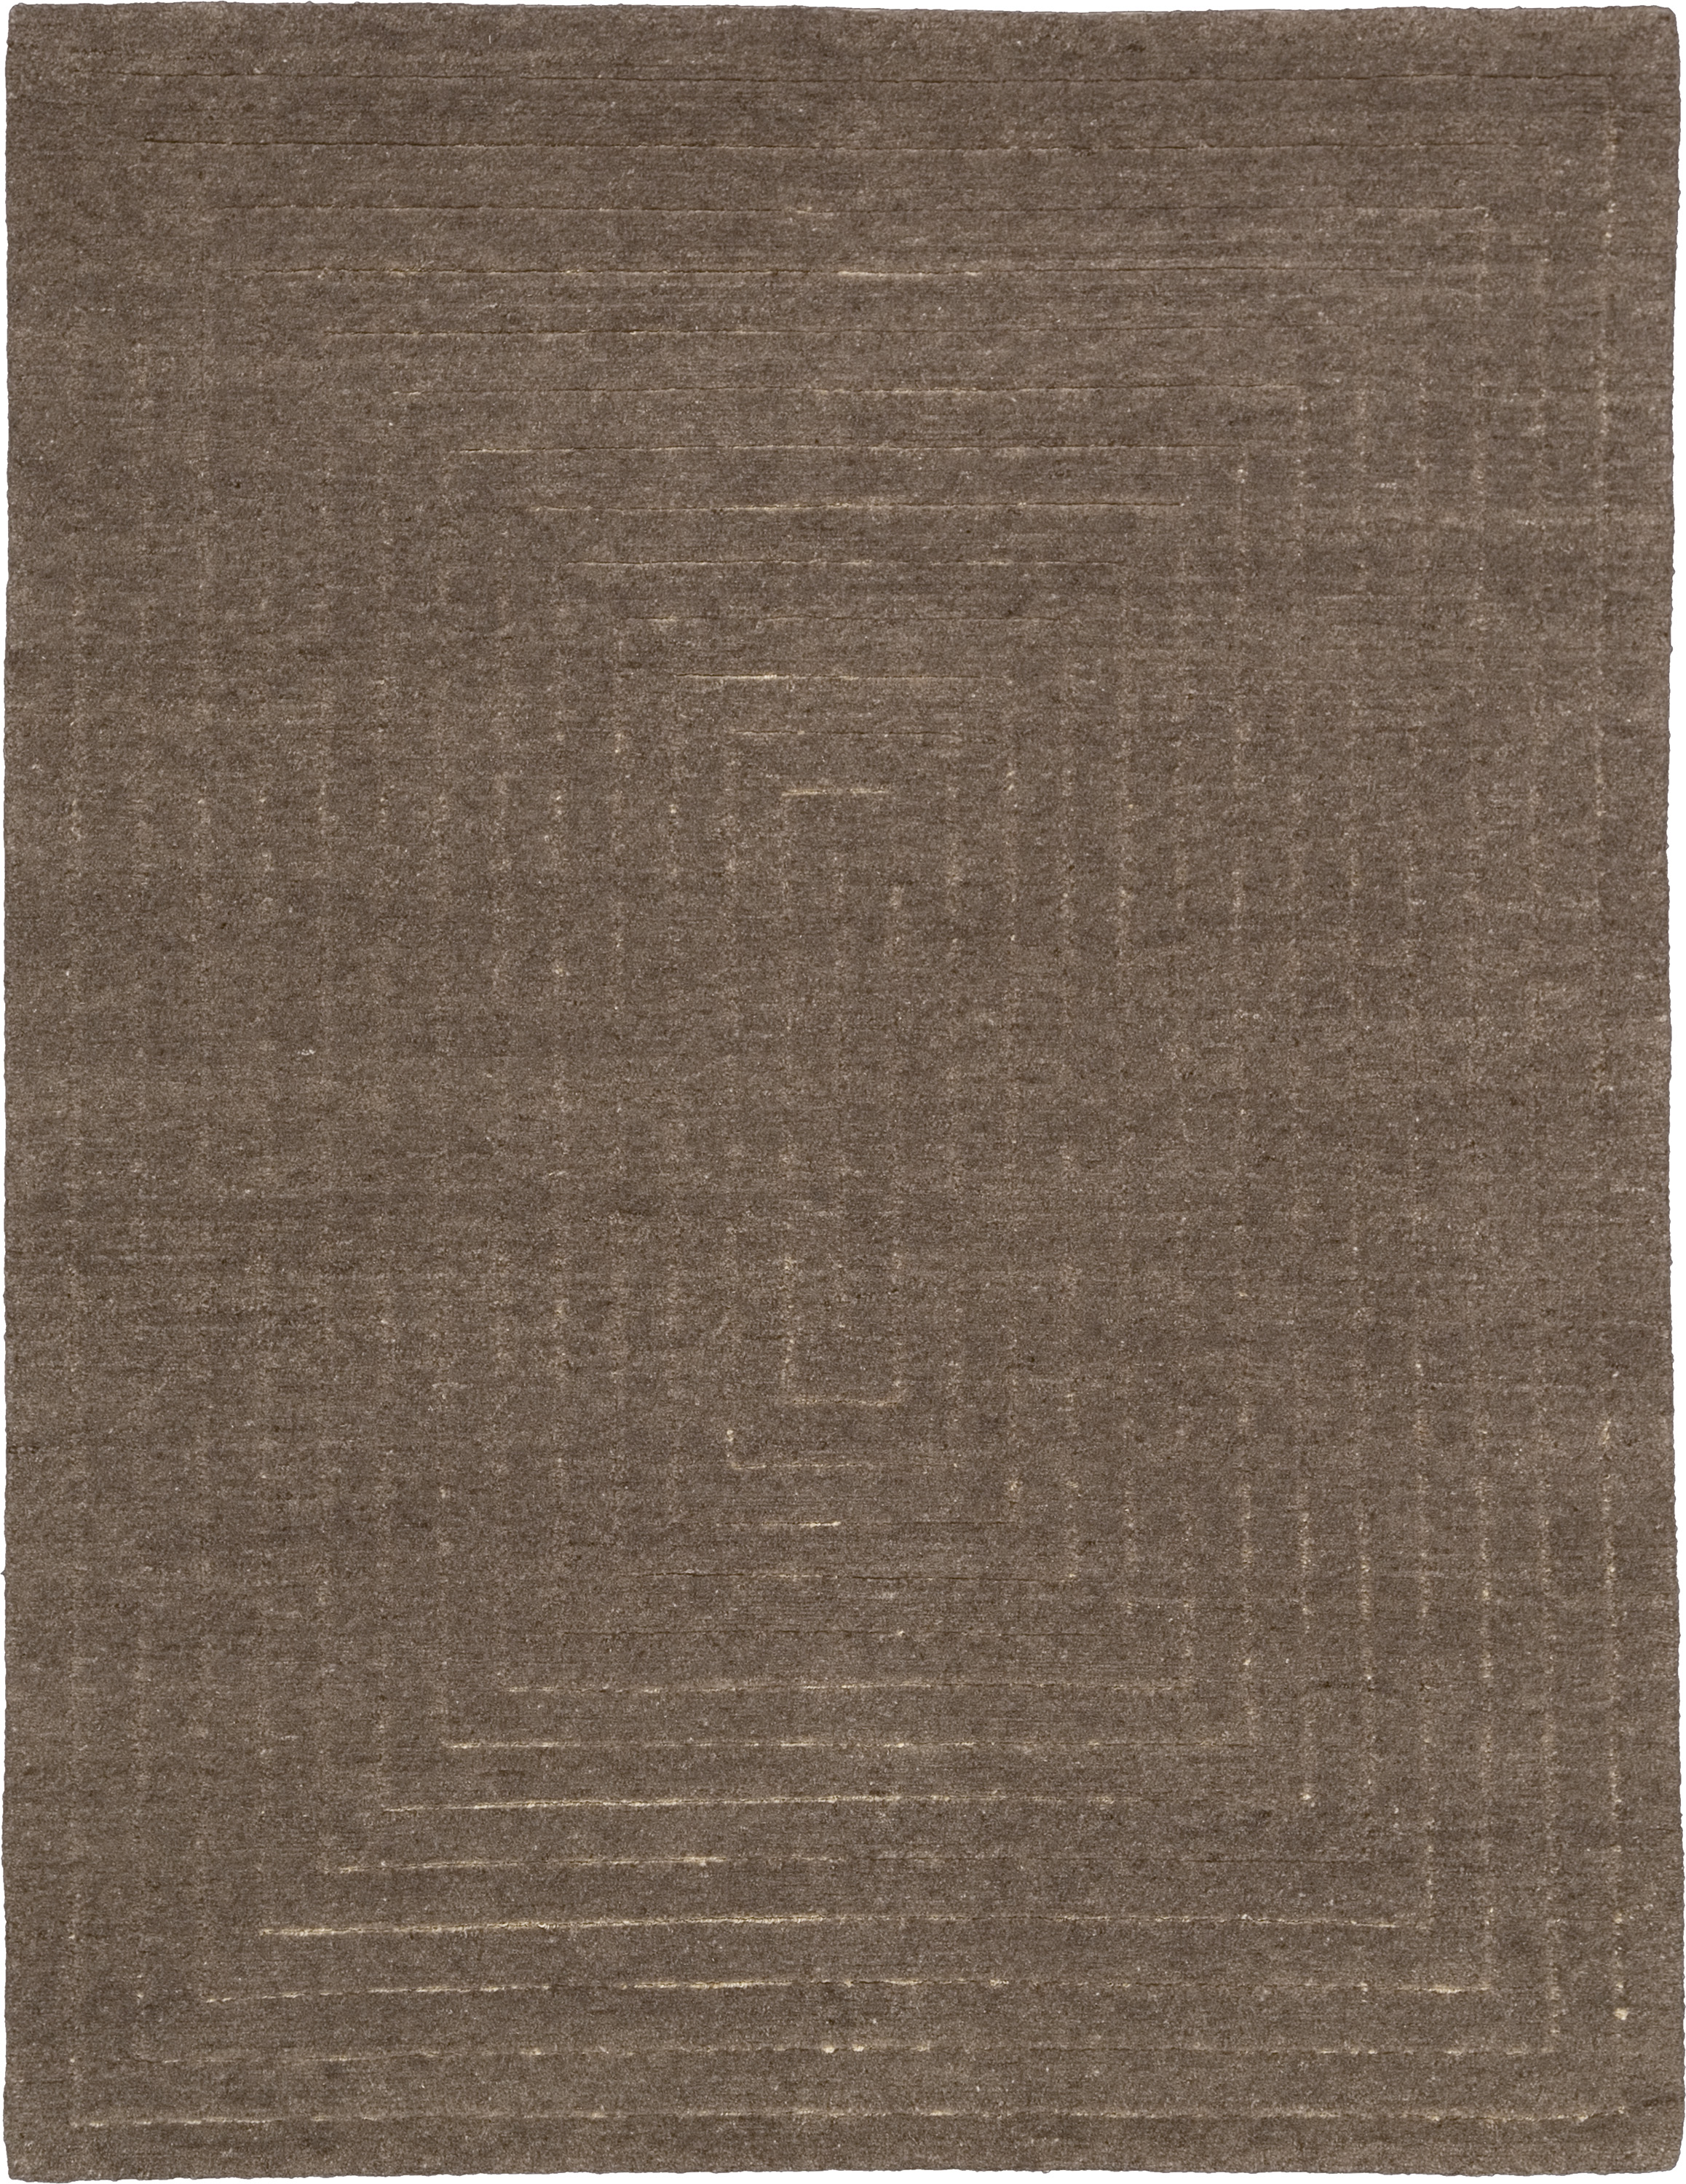 Elaine Design | Custom Modern Carpets | FJ Hakimian | Carpet Gallery in NY